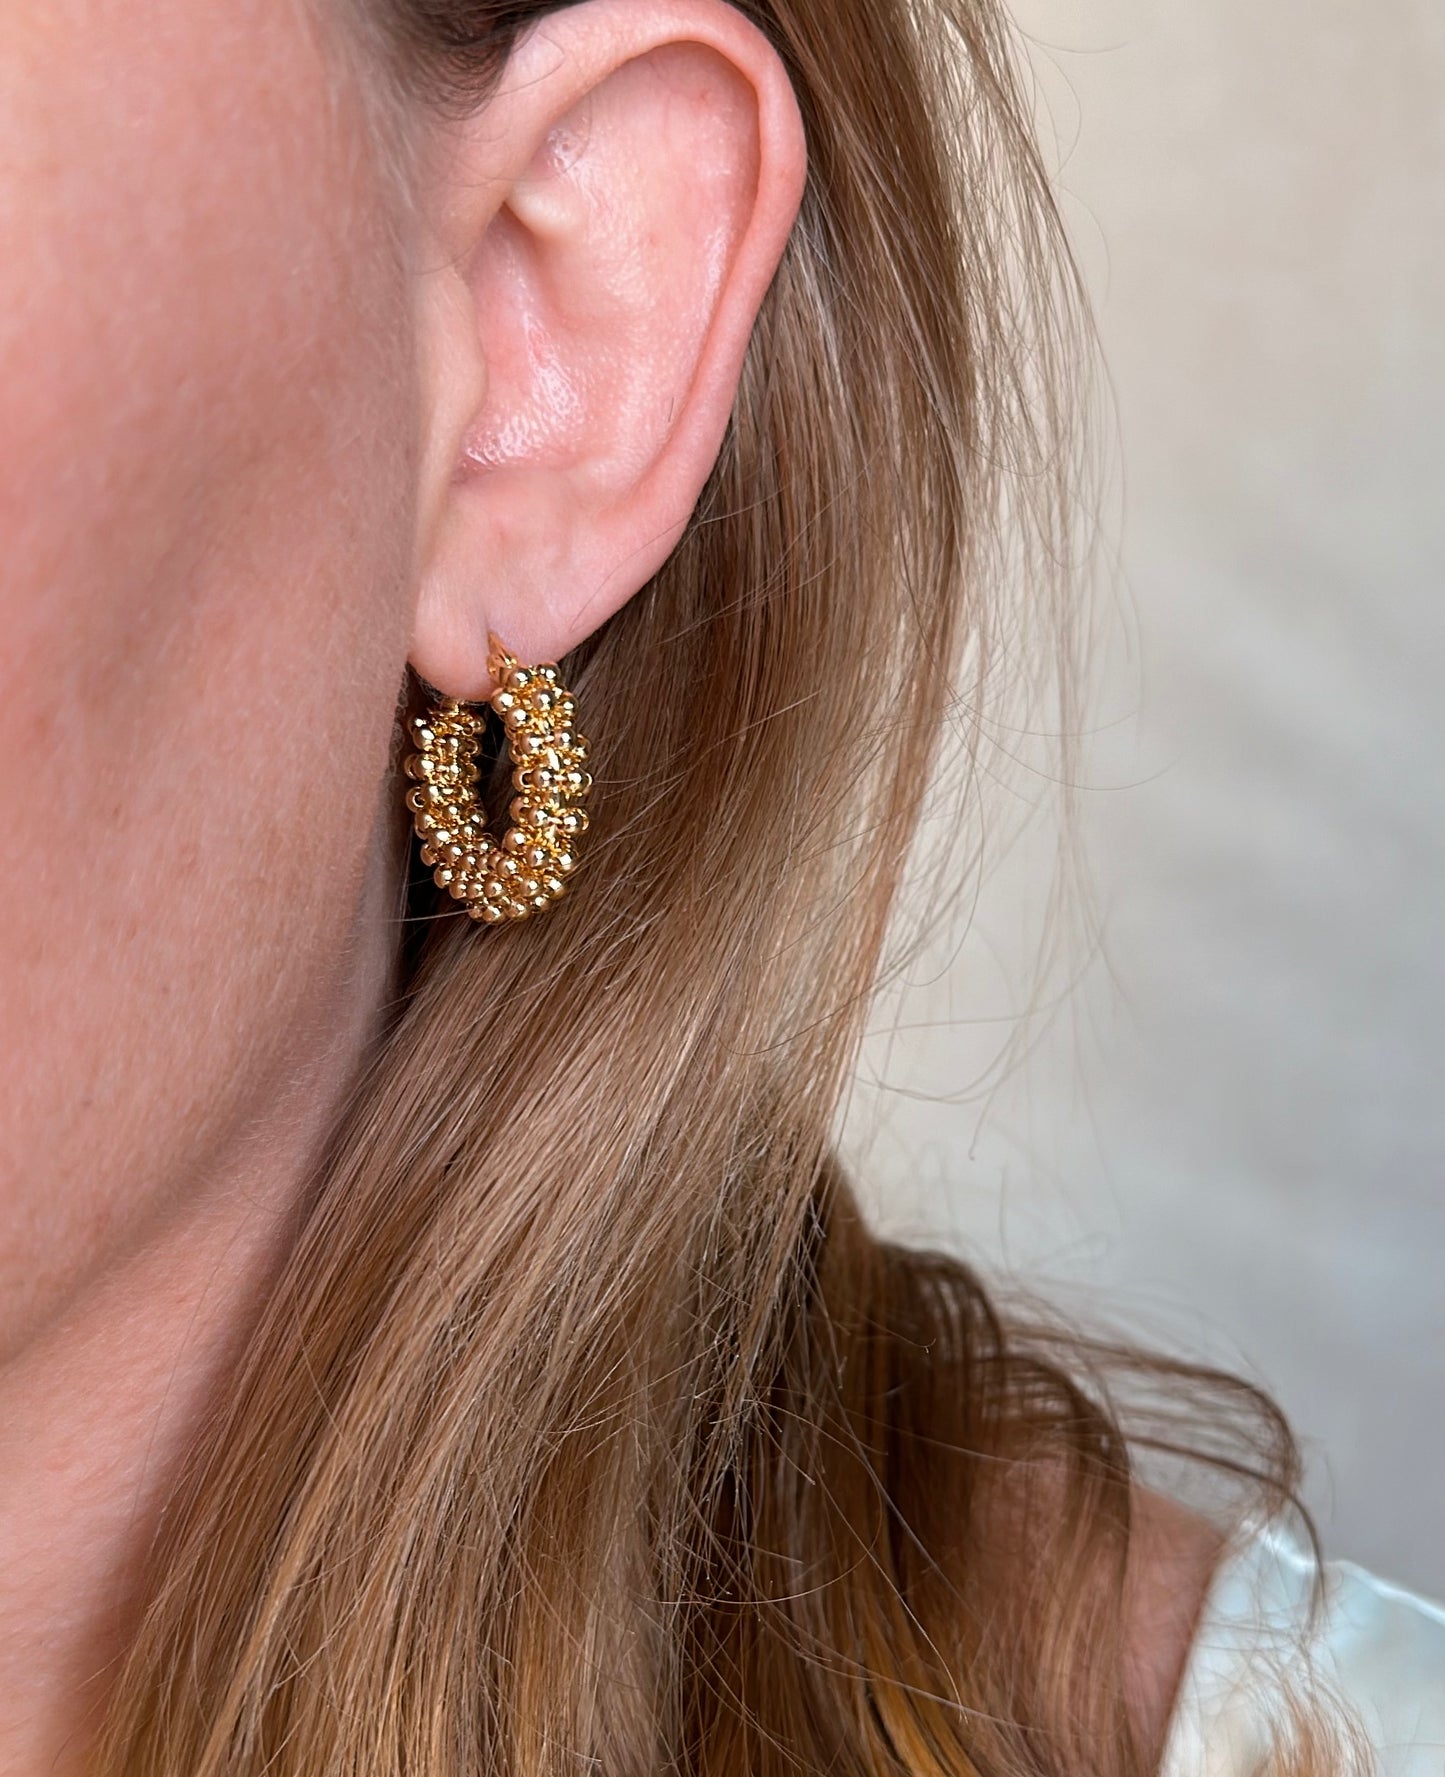 18k Gold Filled Beaded Cluster Hoop Earrings